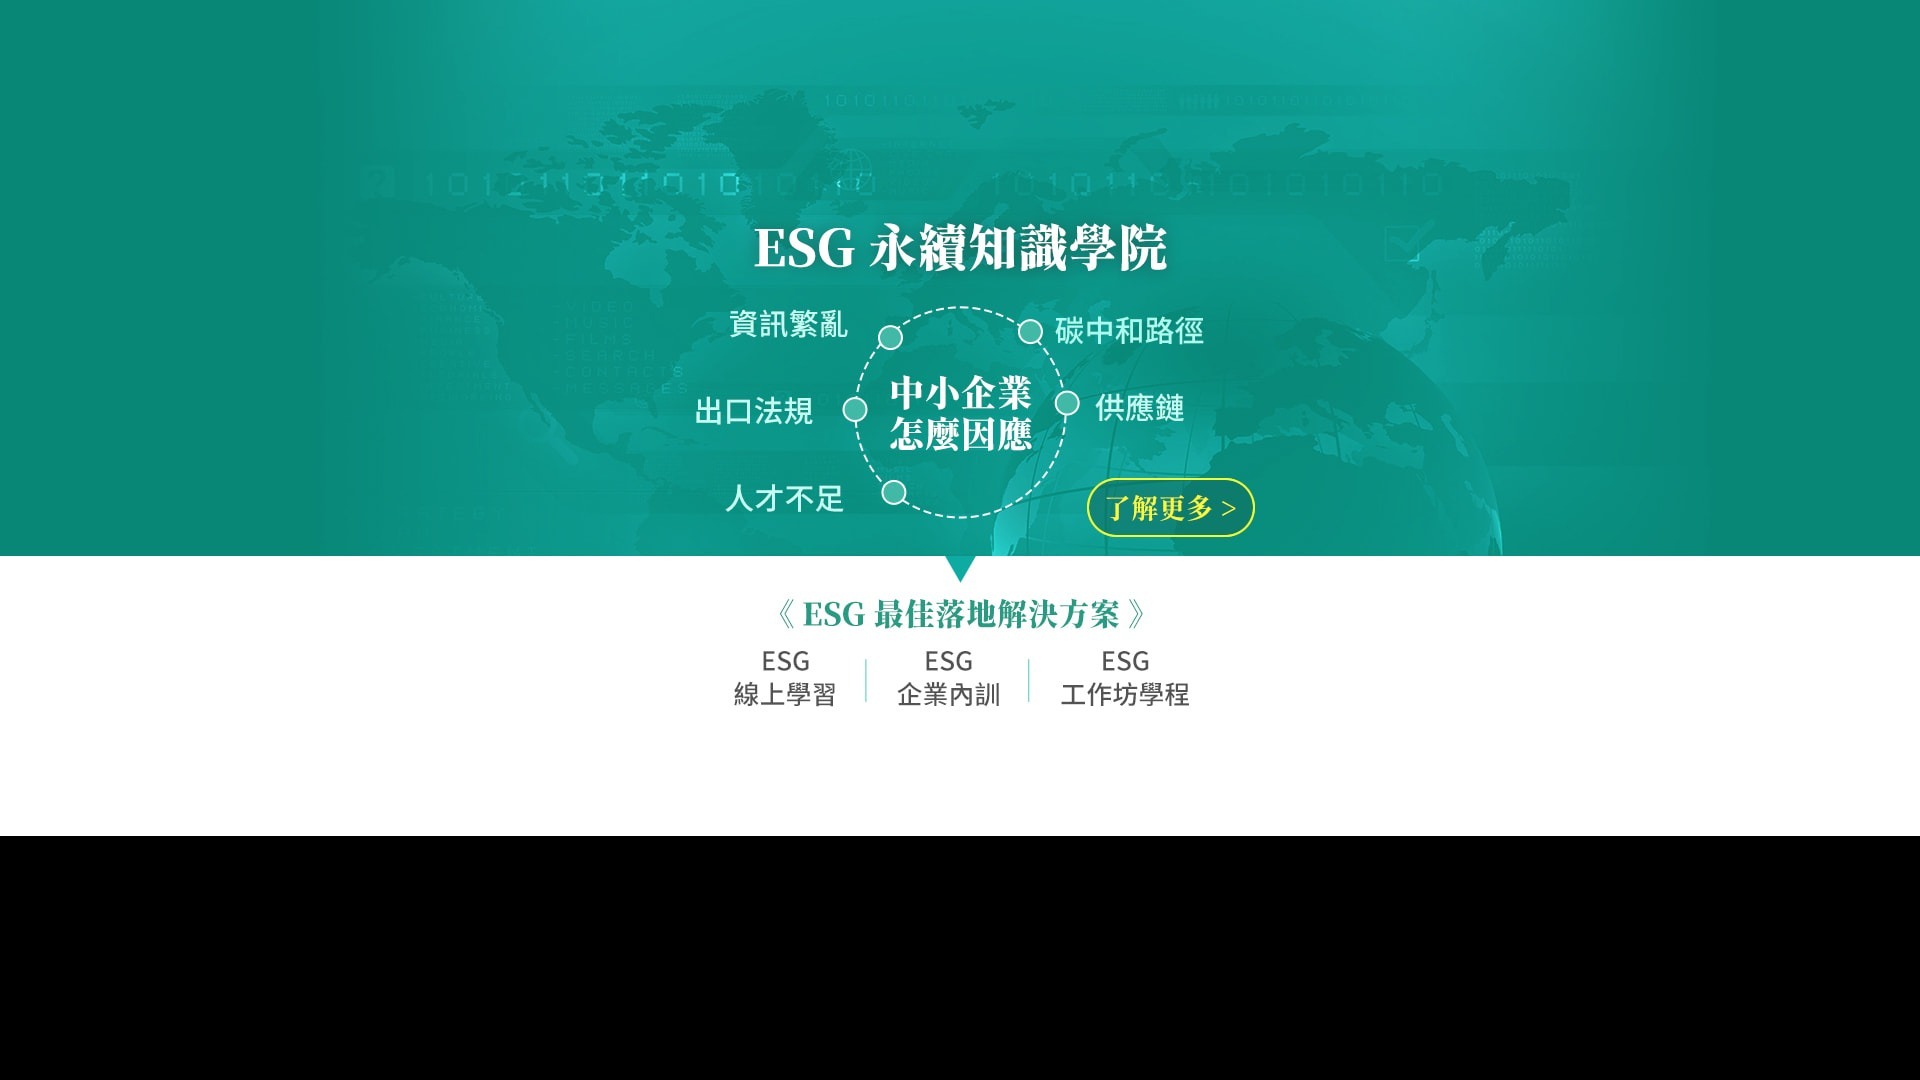 ESG 永續知識學院